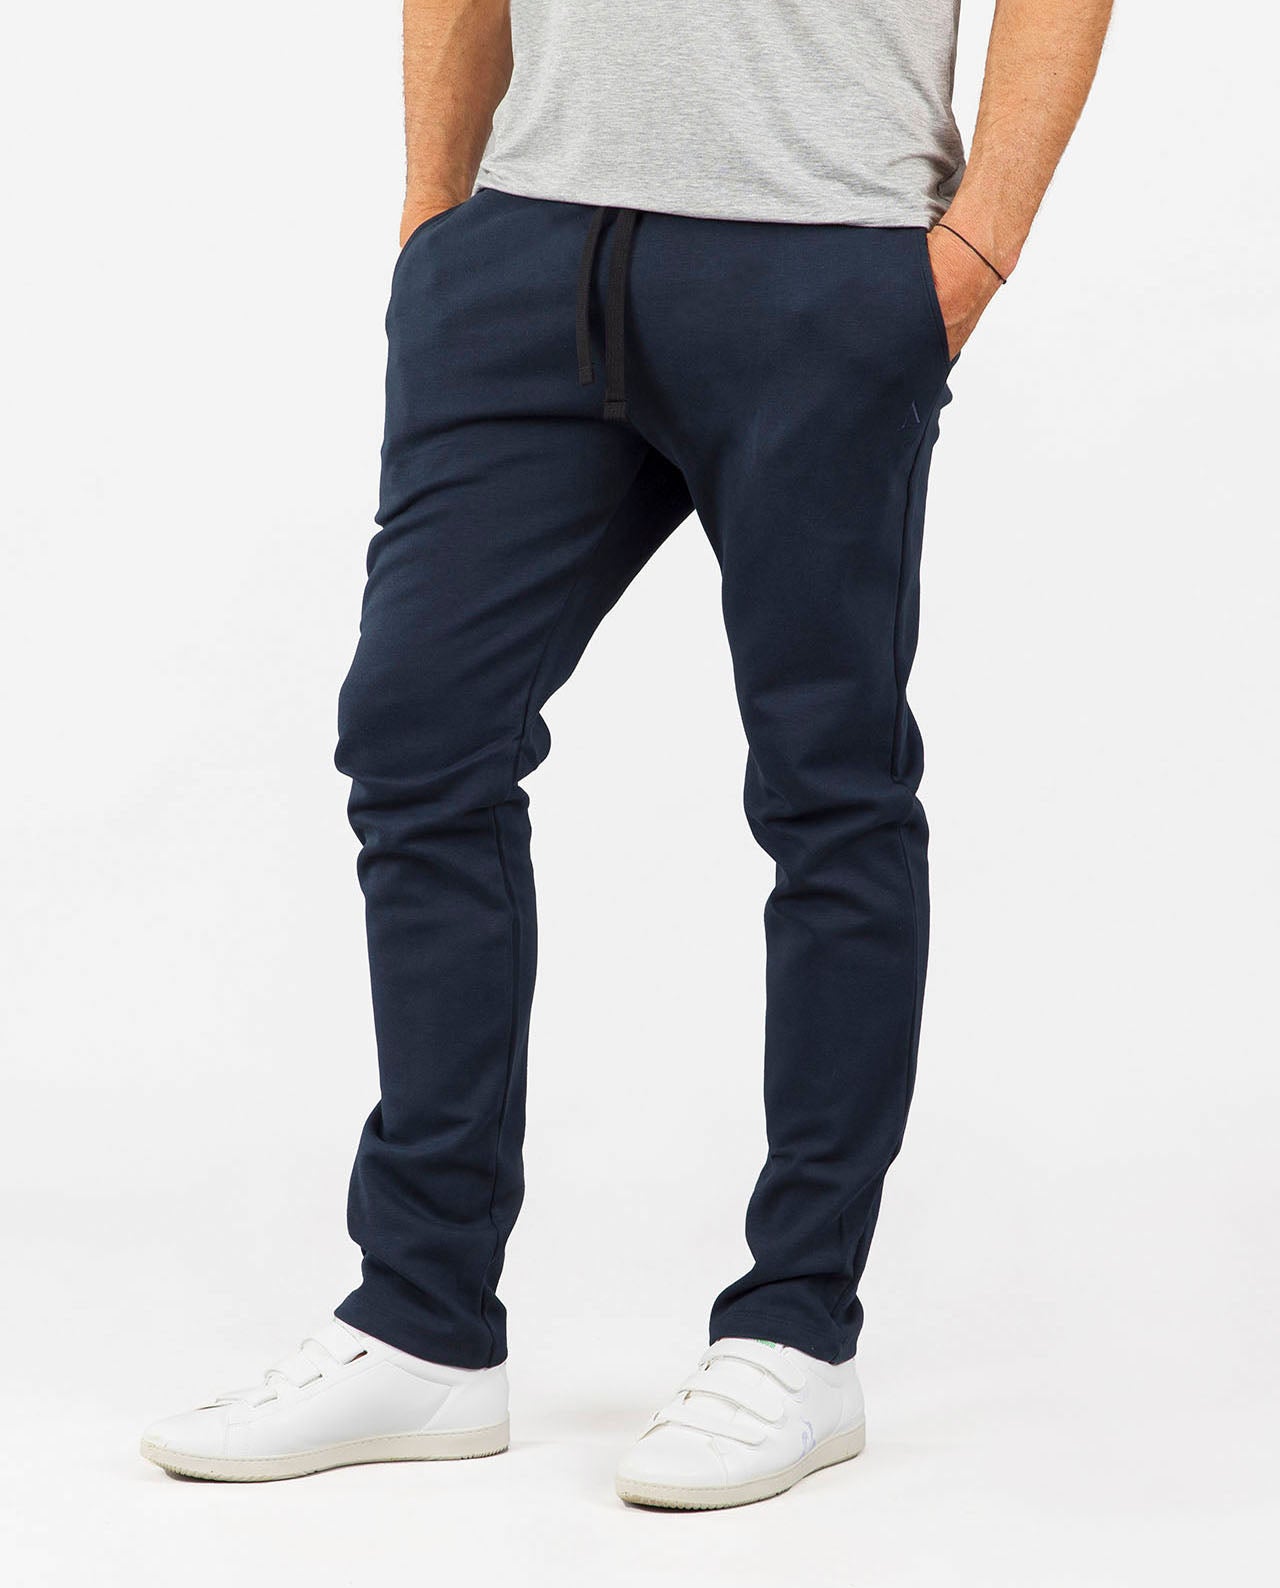 Pantalon Loungewear Jersey Coton BIO Homme Éthique Apnée Swimwear